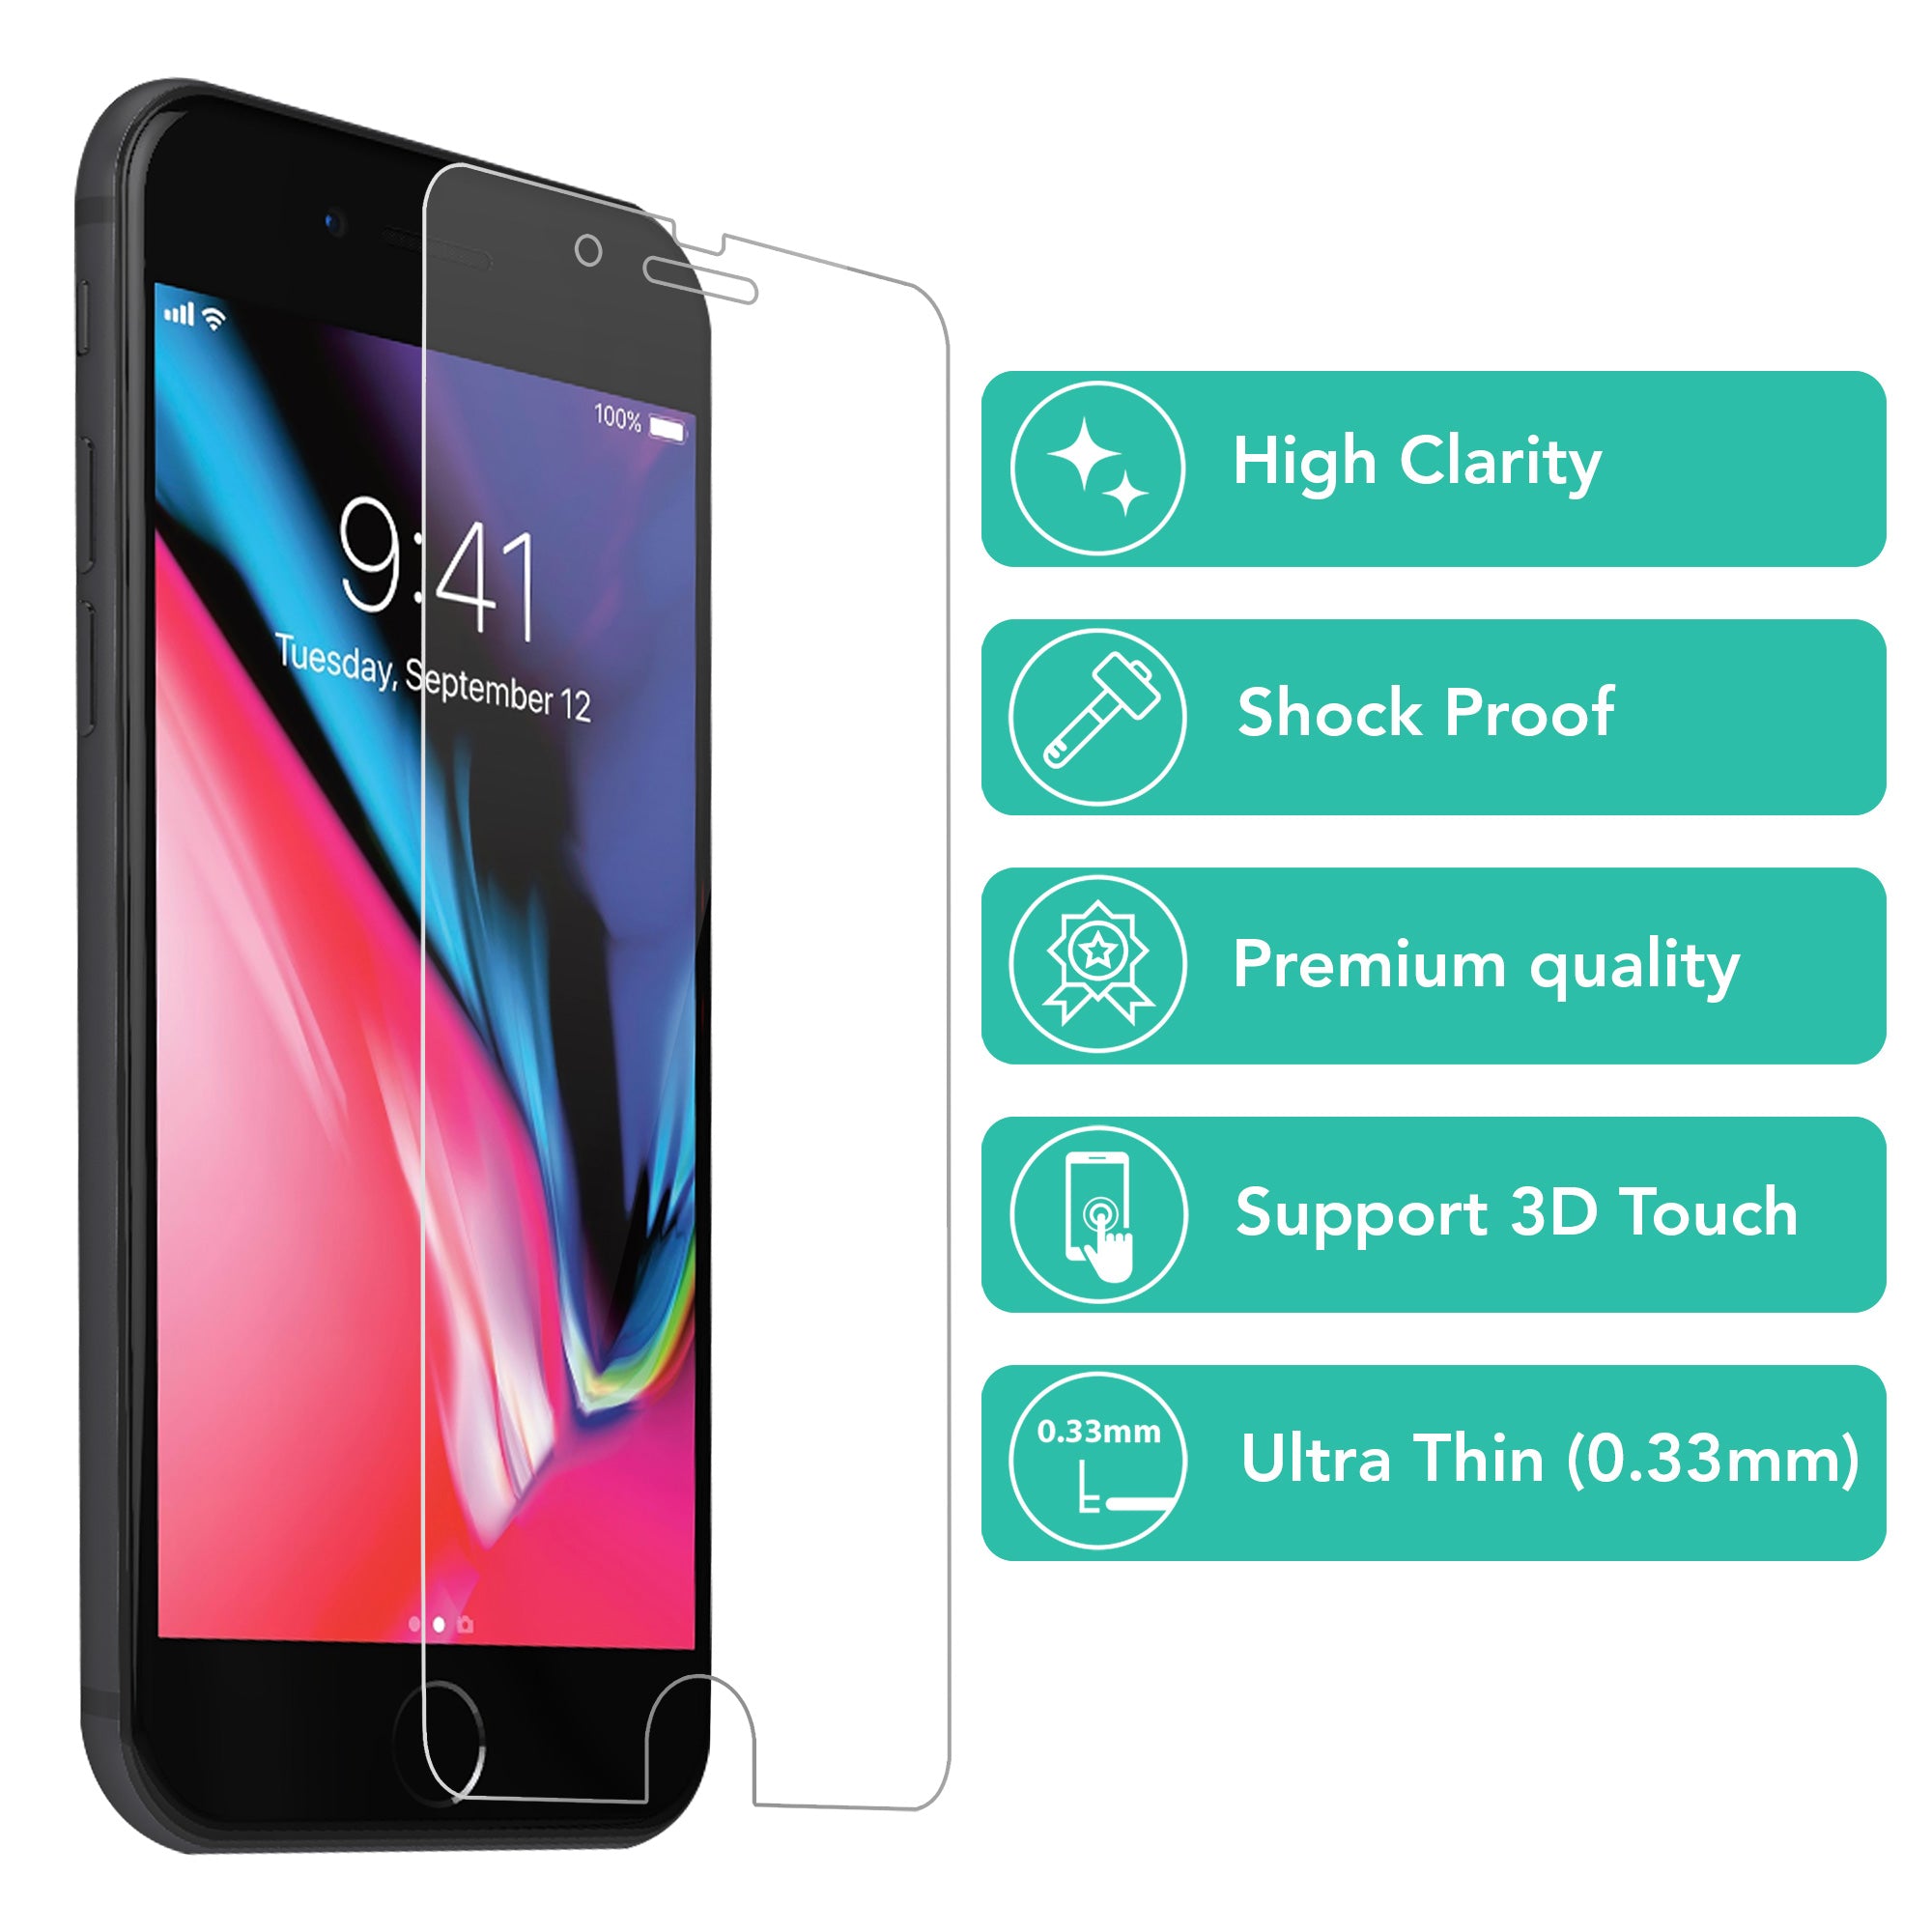 iPhone 8 Plus / 7 Plus / 6S Plus / 6 Plus Screen Protector Tempered Glass